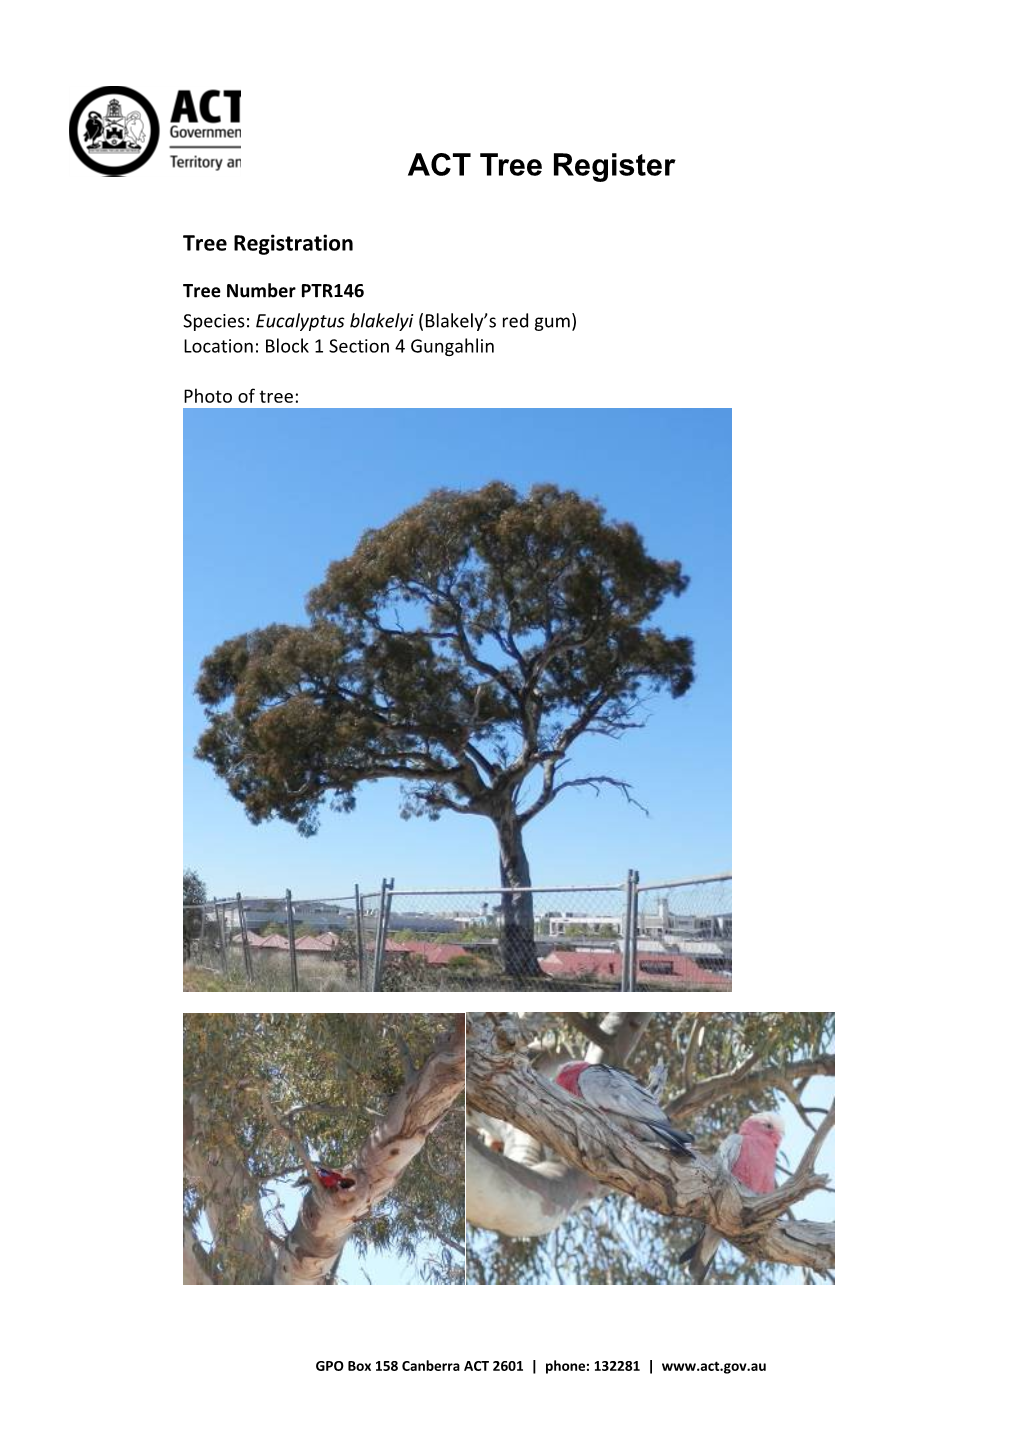 ACT Tree Register PTR146